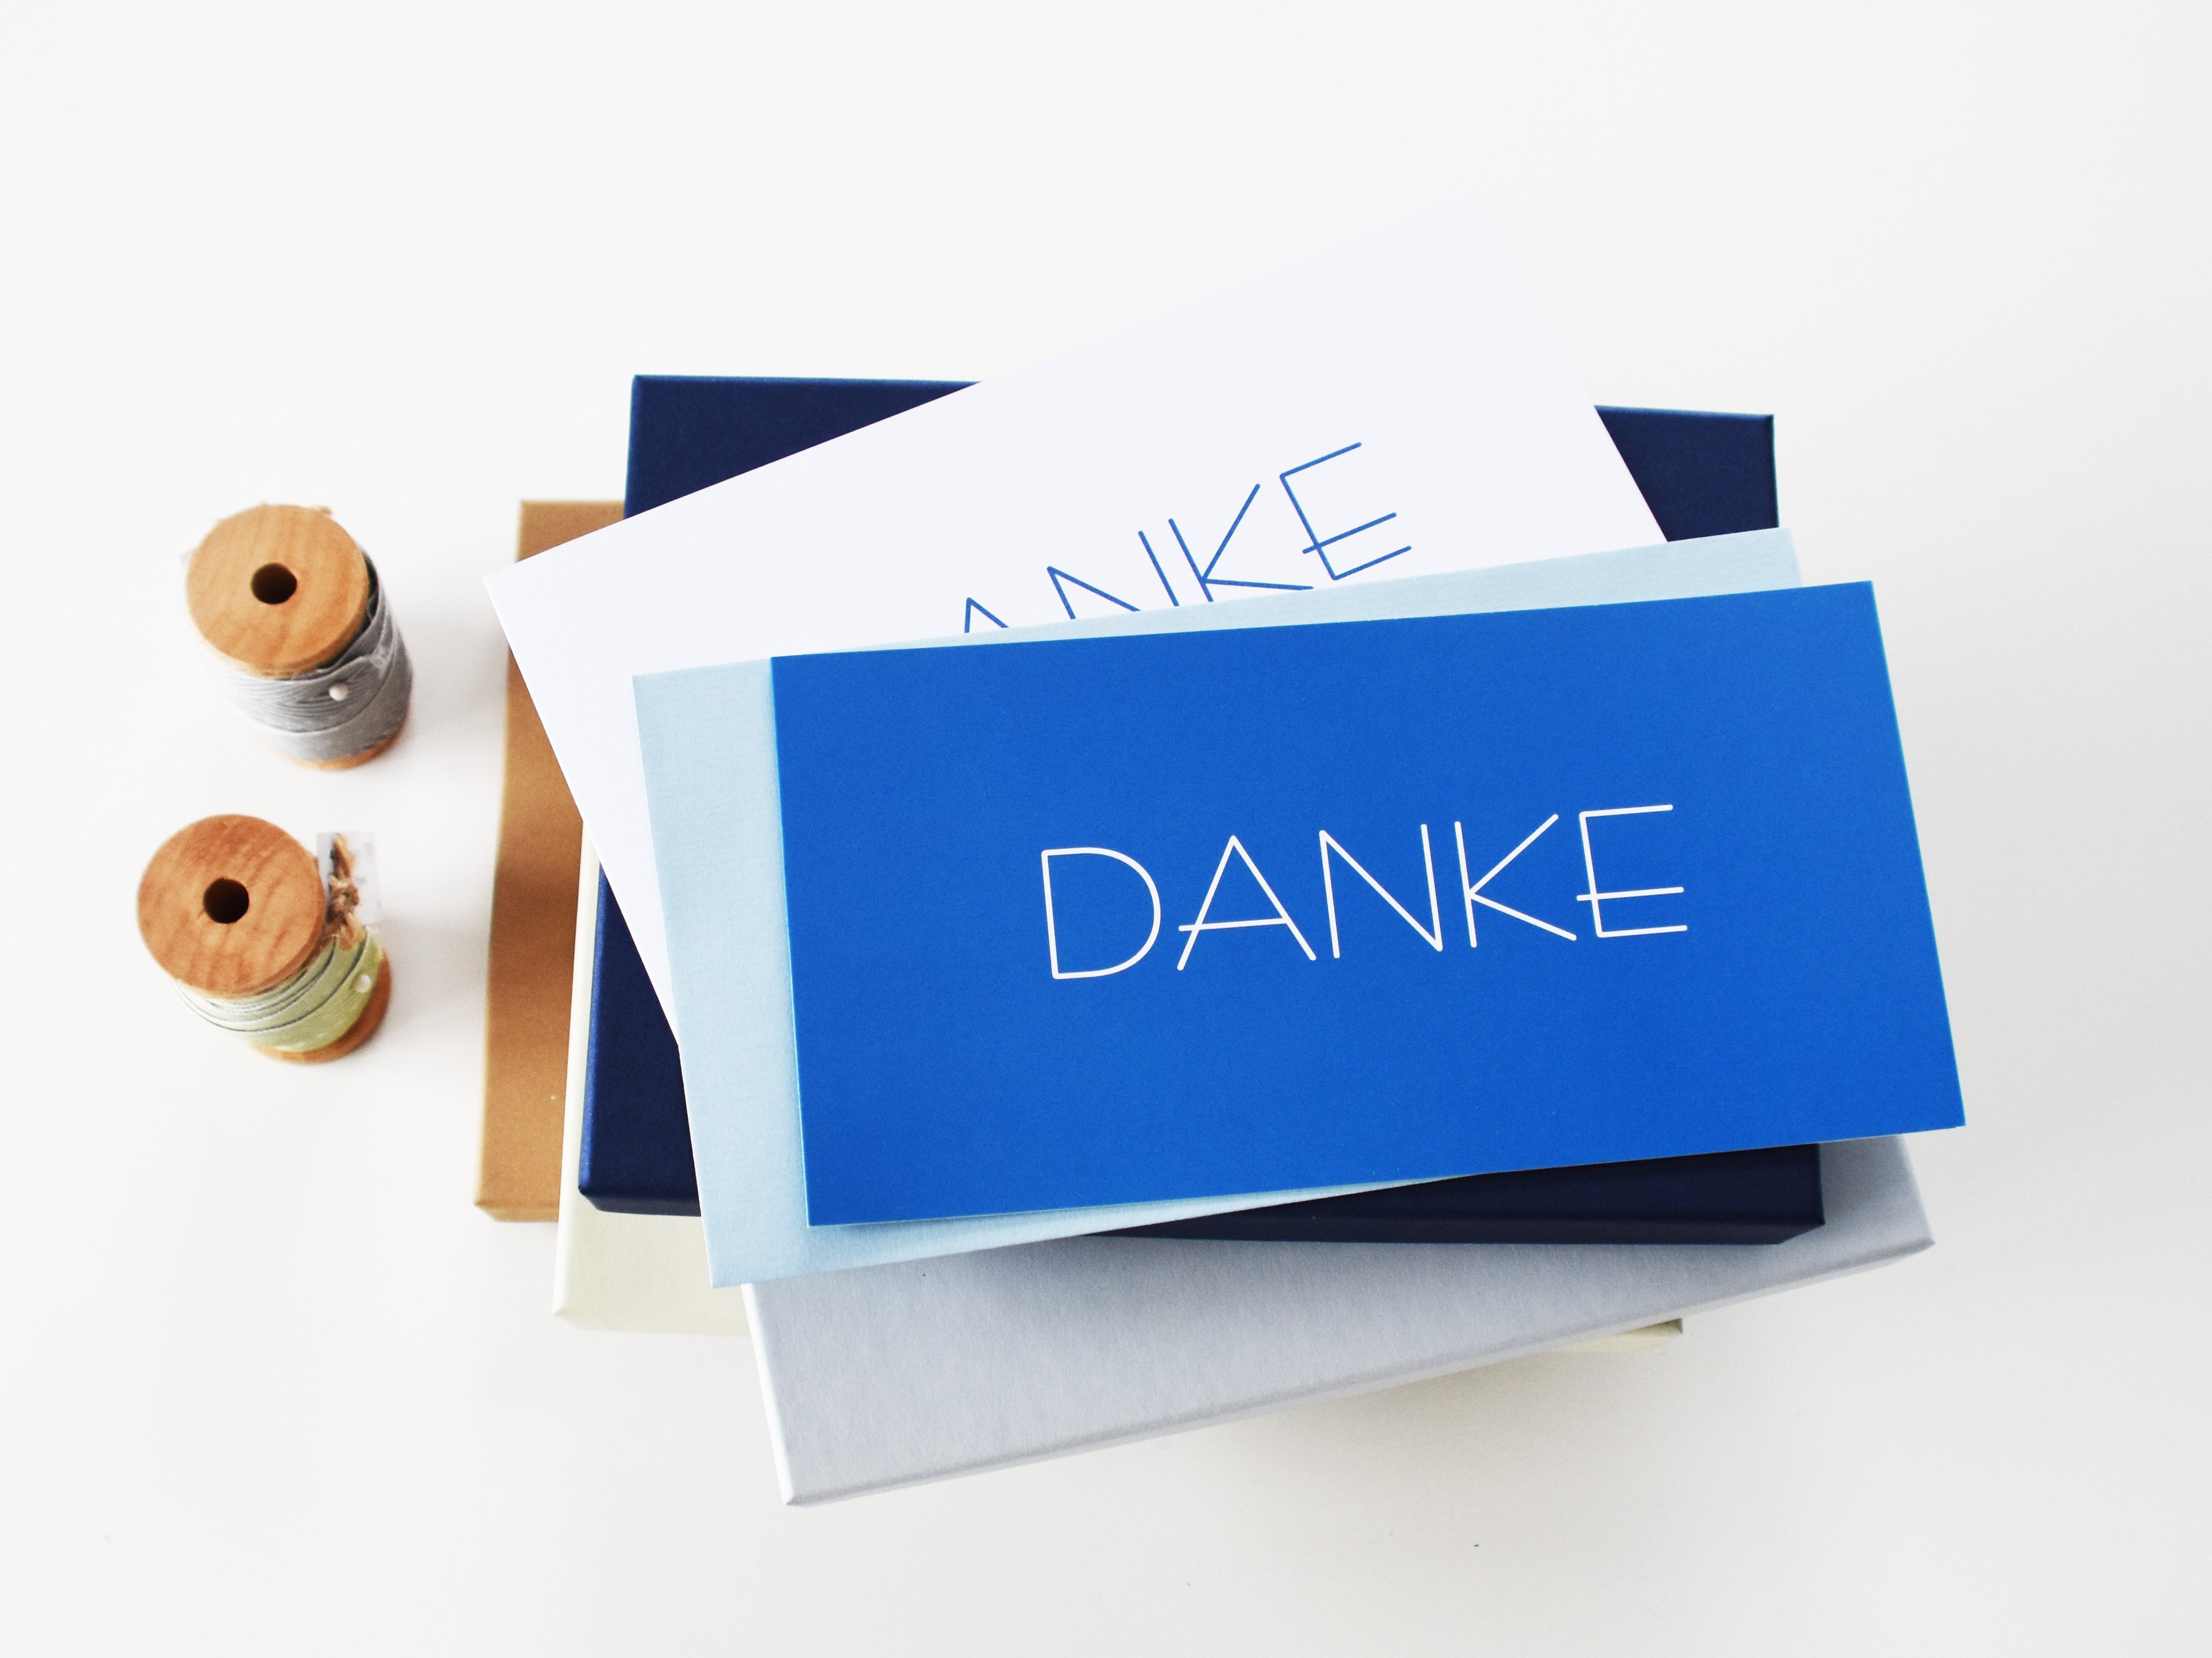 Grusskarten_Dankesch-n-Karte_DAnke-Karten_blau-weissz1OzwX3sT1lUO